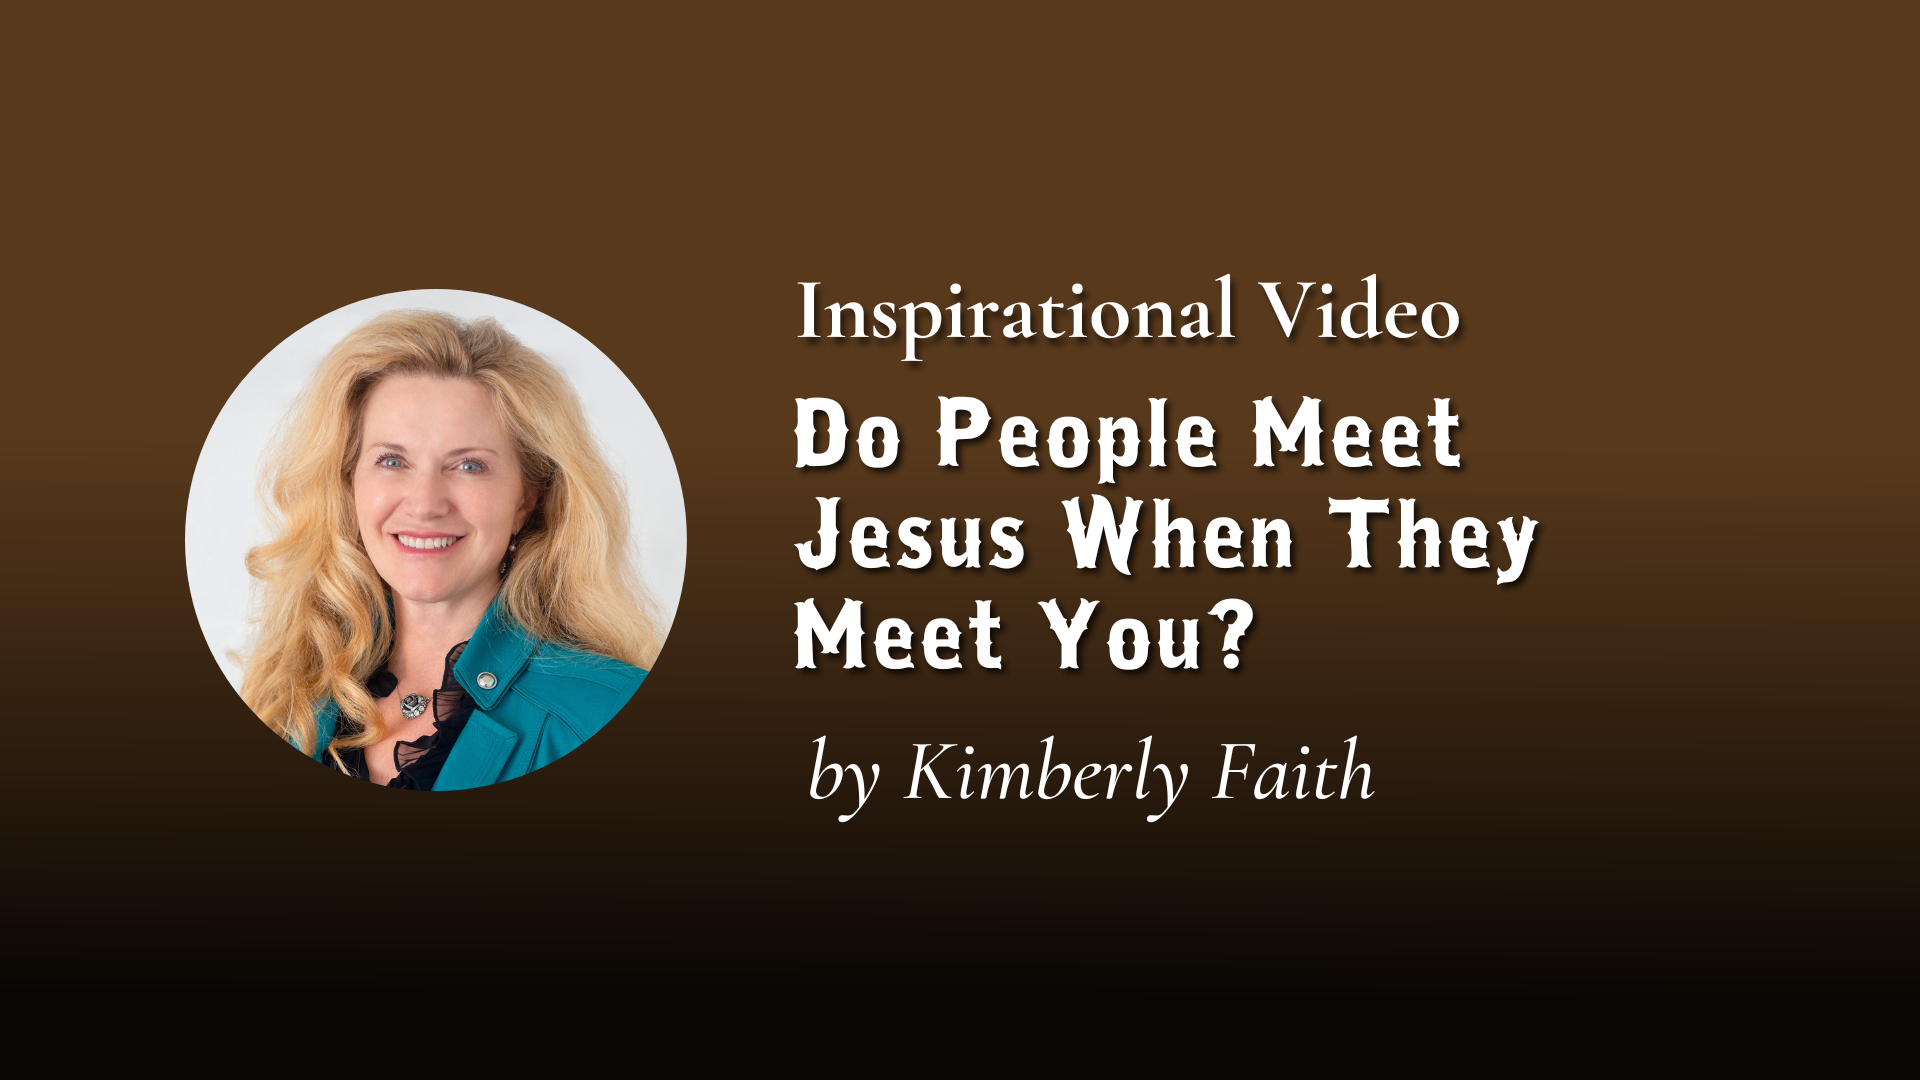 Do People Meet Jesus When They Meet You?